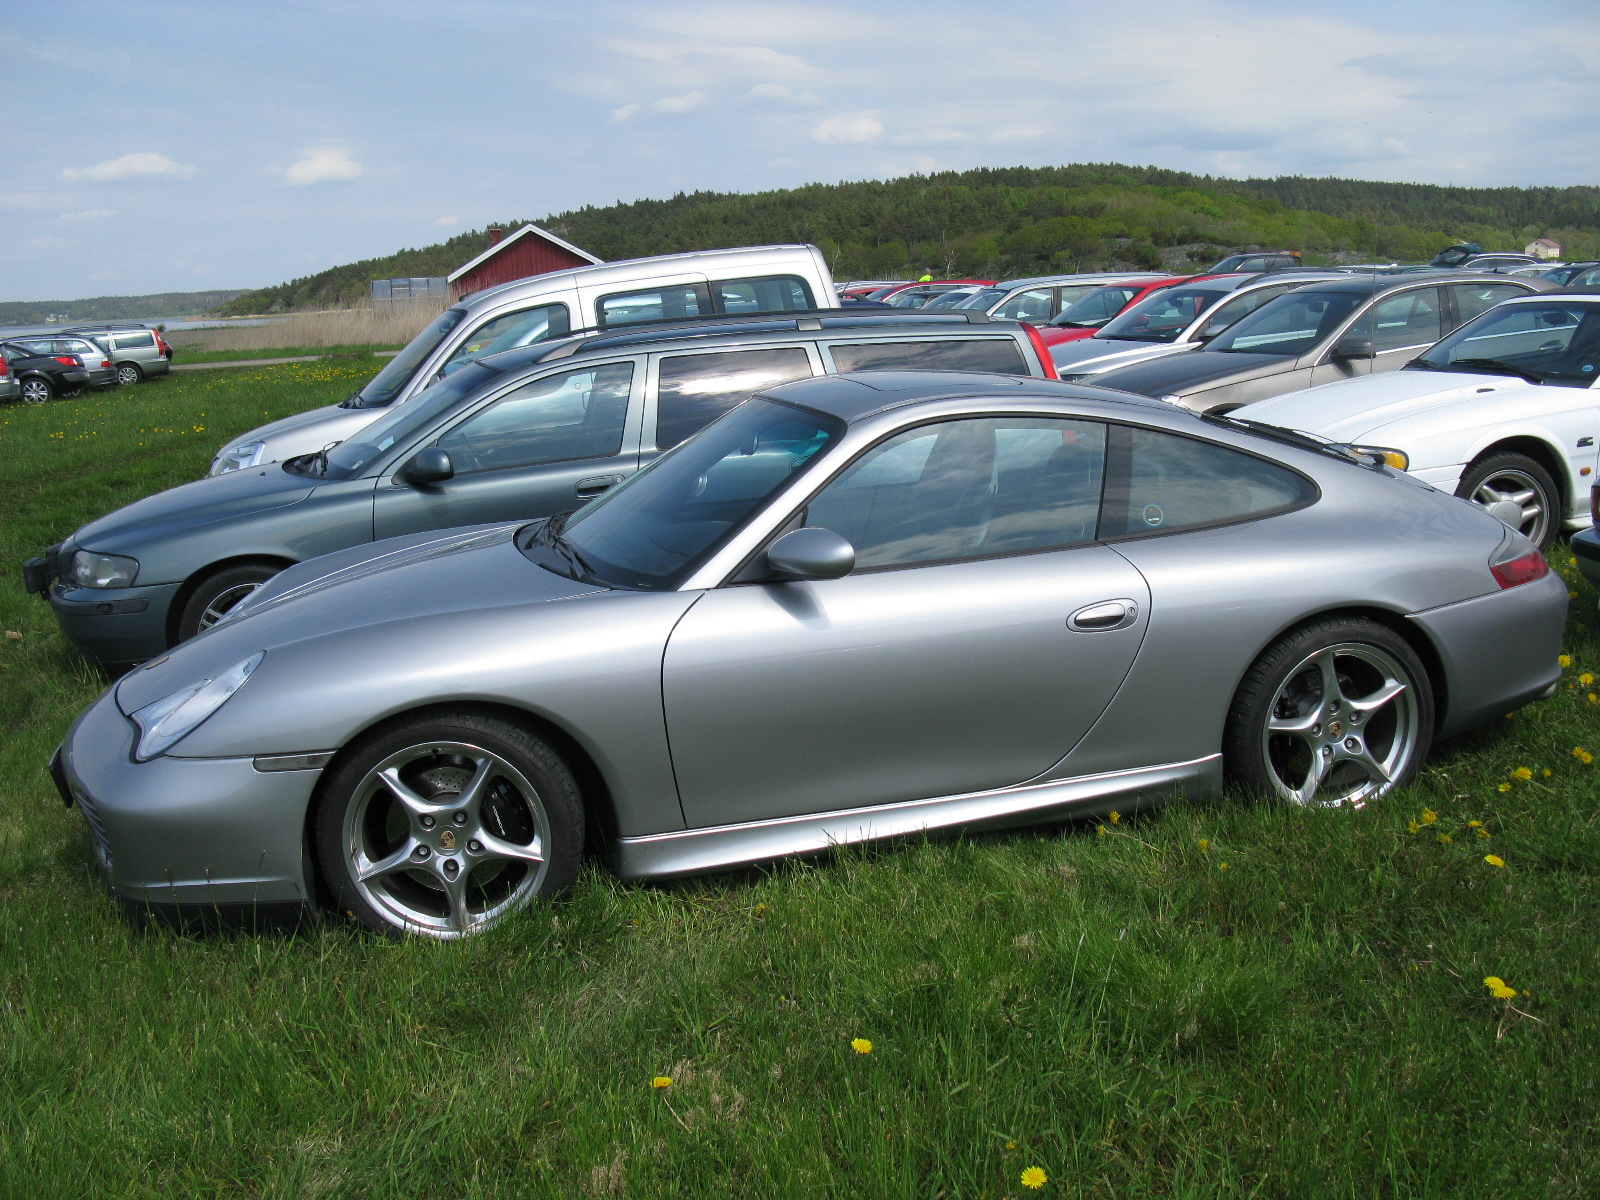 File:Porsche 911 (996) Carrera 2 (7158165139).jpg - Wikimedia Commons